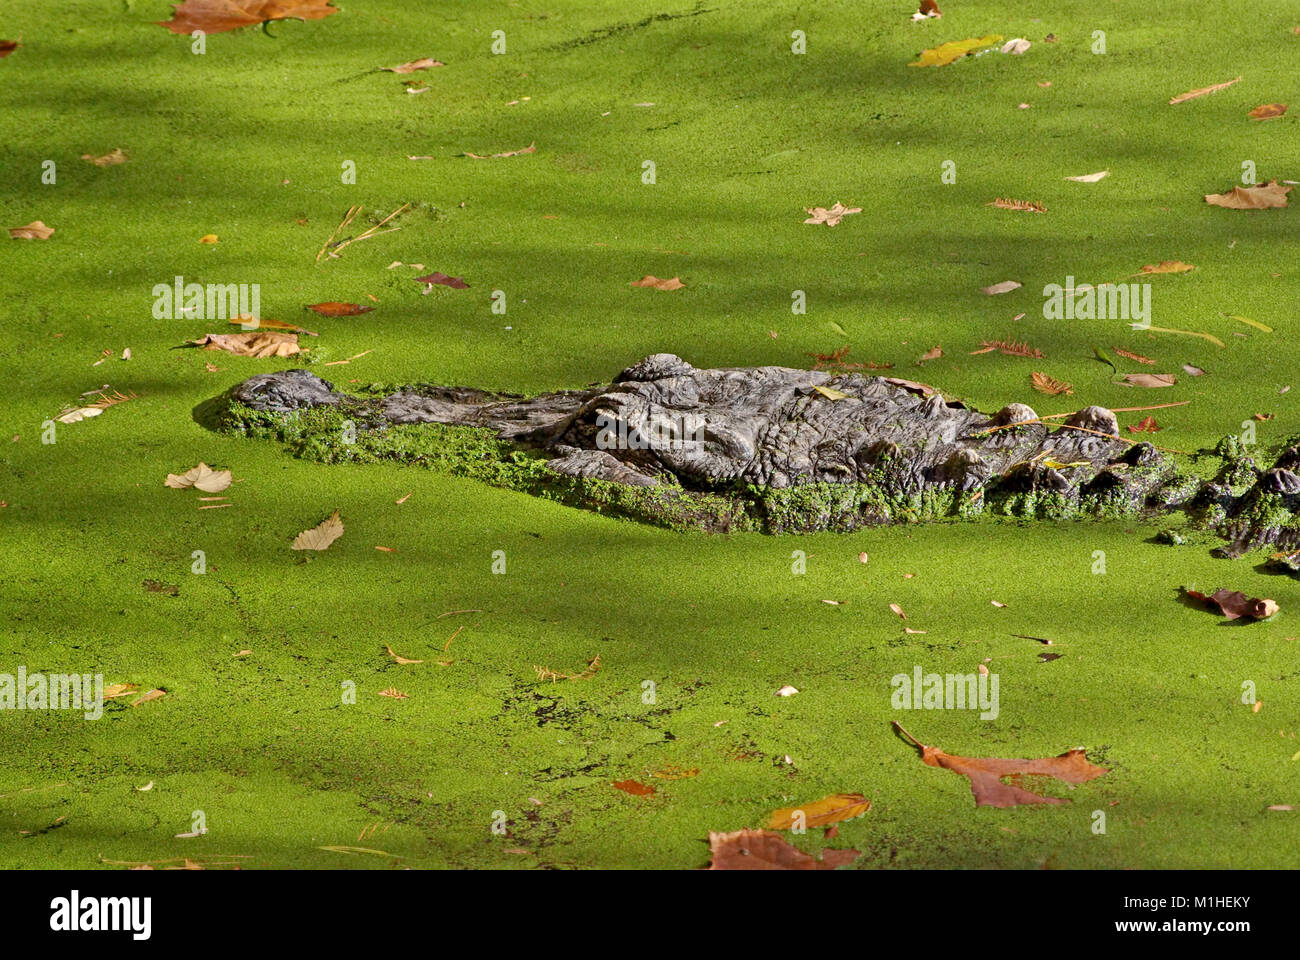 American alligator in swamp Stock Photo